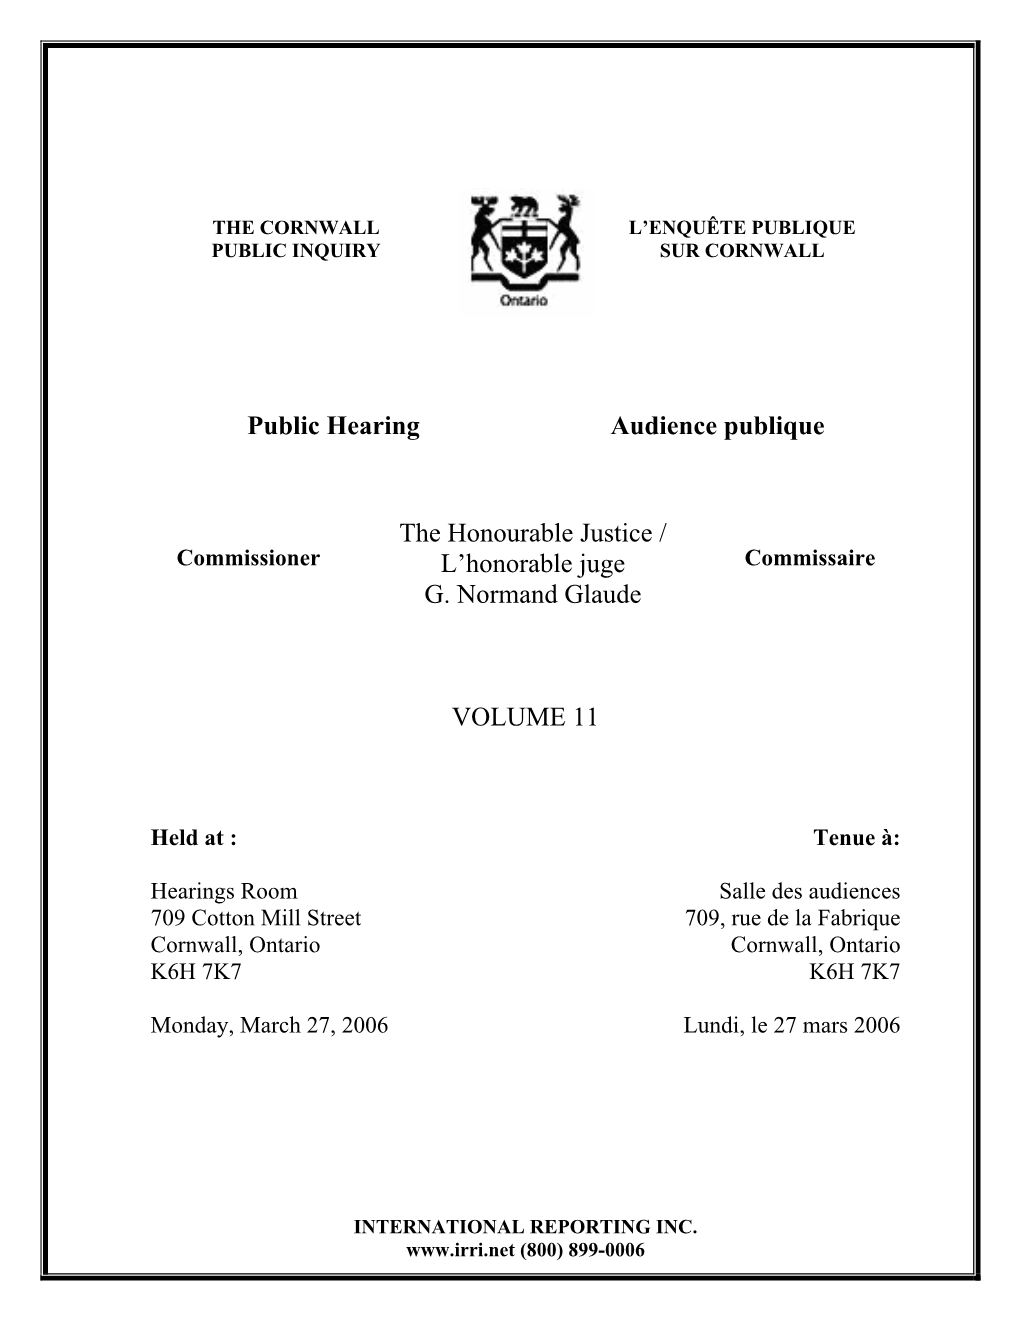 Public Hearing Audience Publique the Honourable Justice / L'honorable Juge G. Normand Glaude VOLUME 11